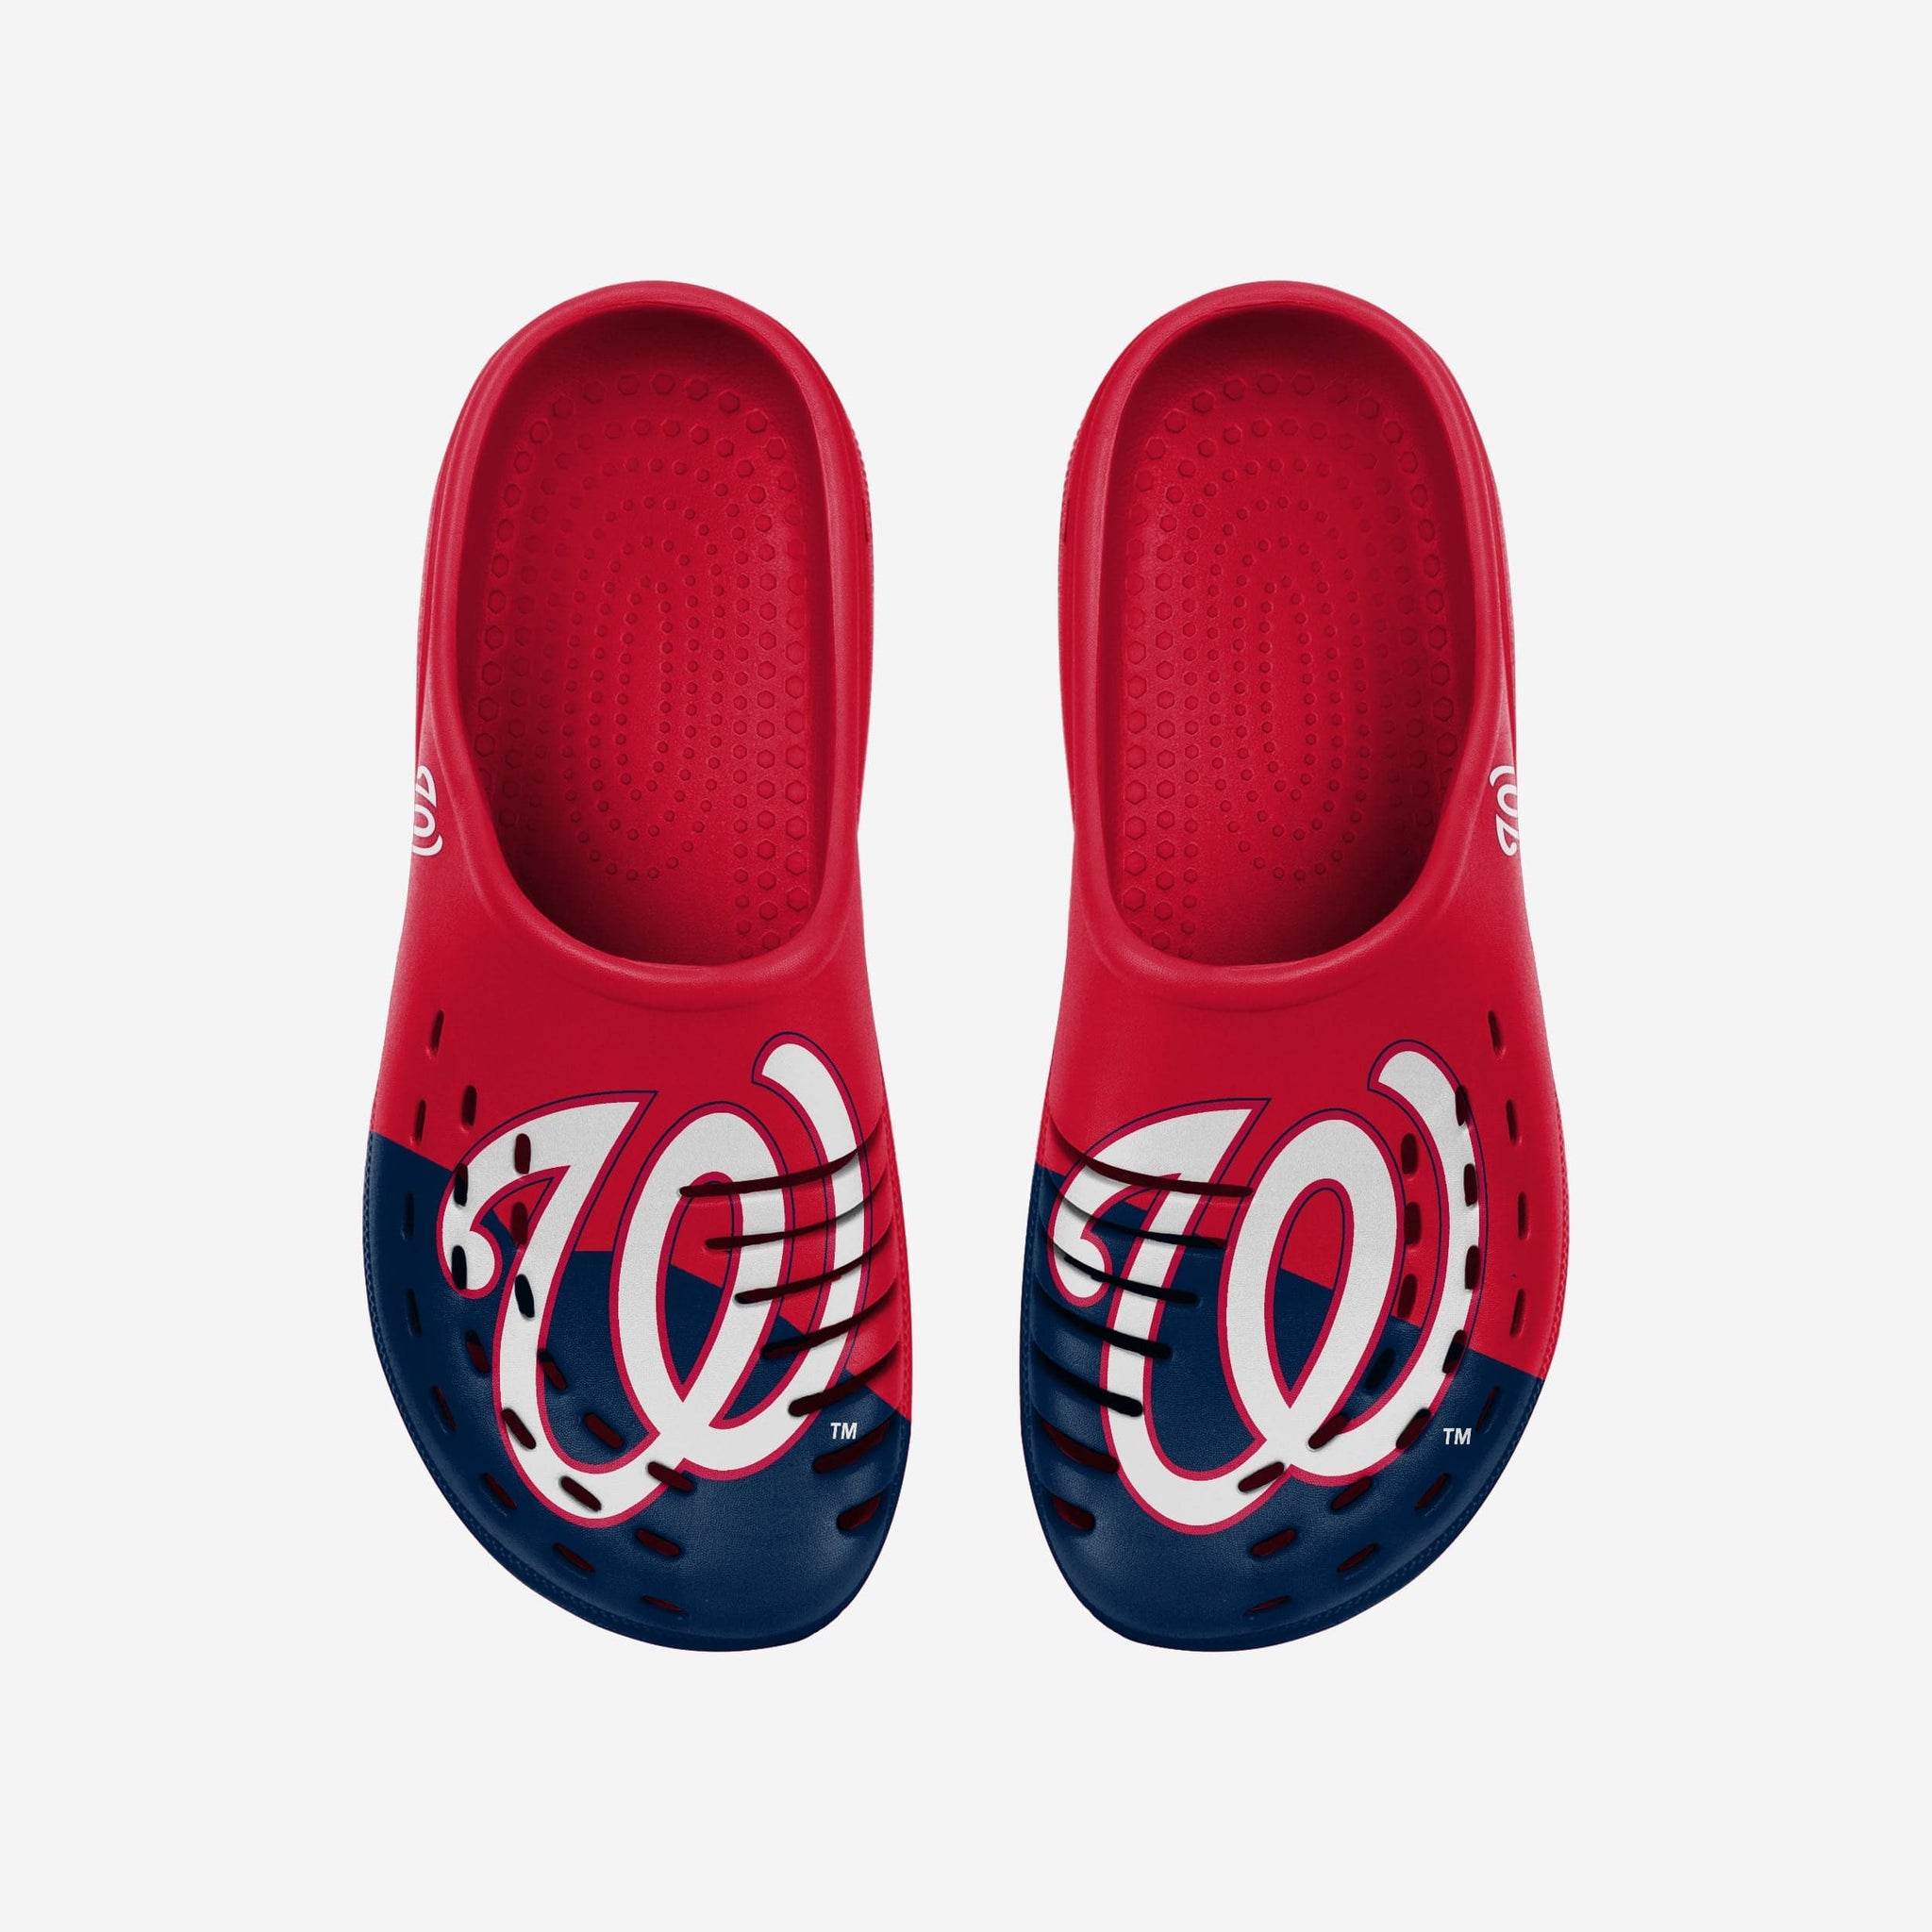 Men's FOCO Boston Red Sox Colorblock Big Logo Sneakers